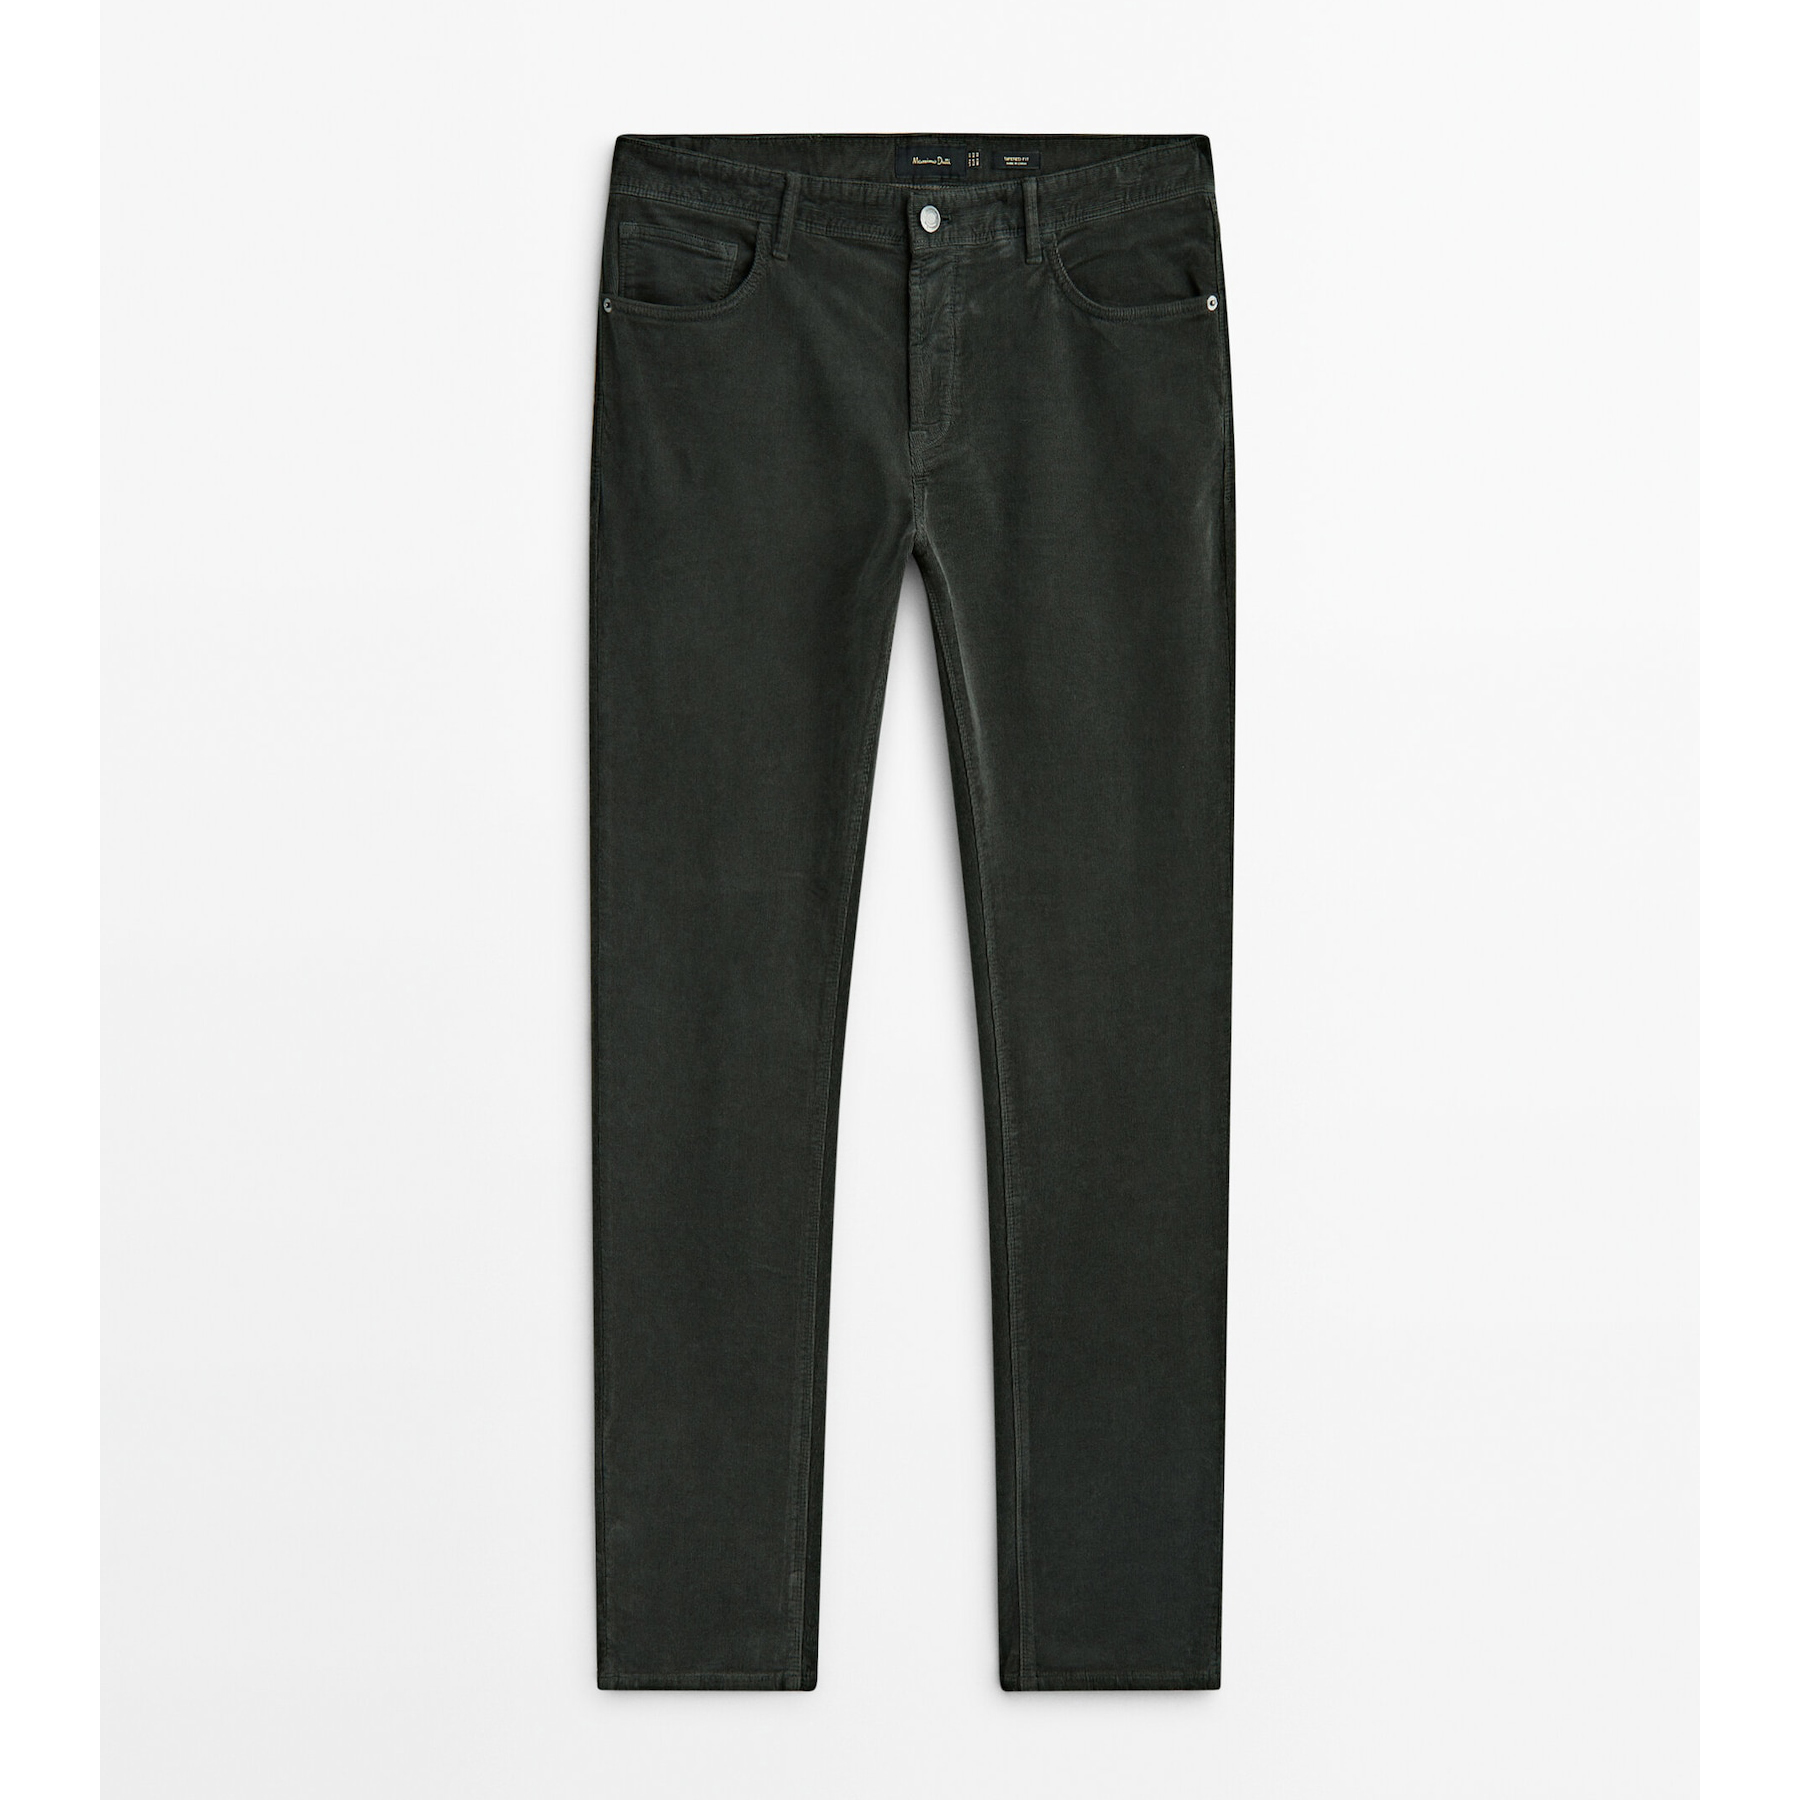 Джинсовые брюки Massimo Dutti Tapered-fit needlecord, хаки джинсовые брюки massimo dutti tapered fit needlecord хаки